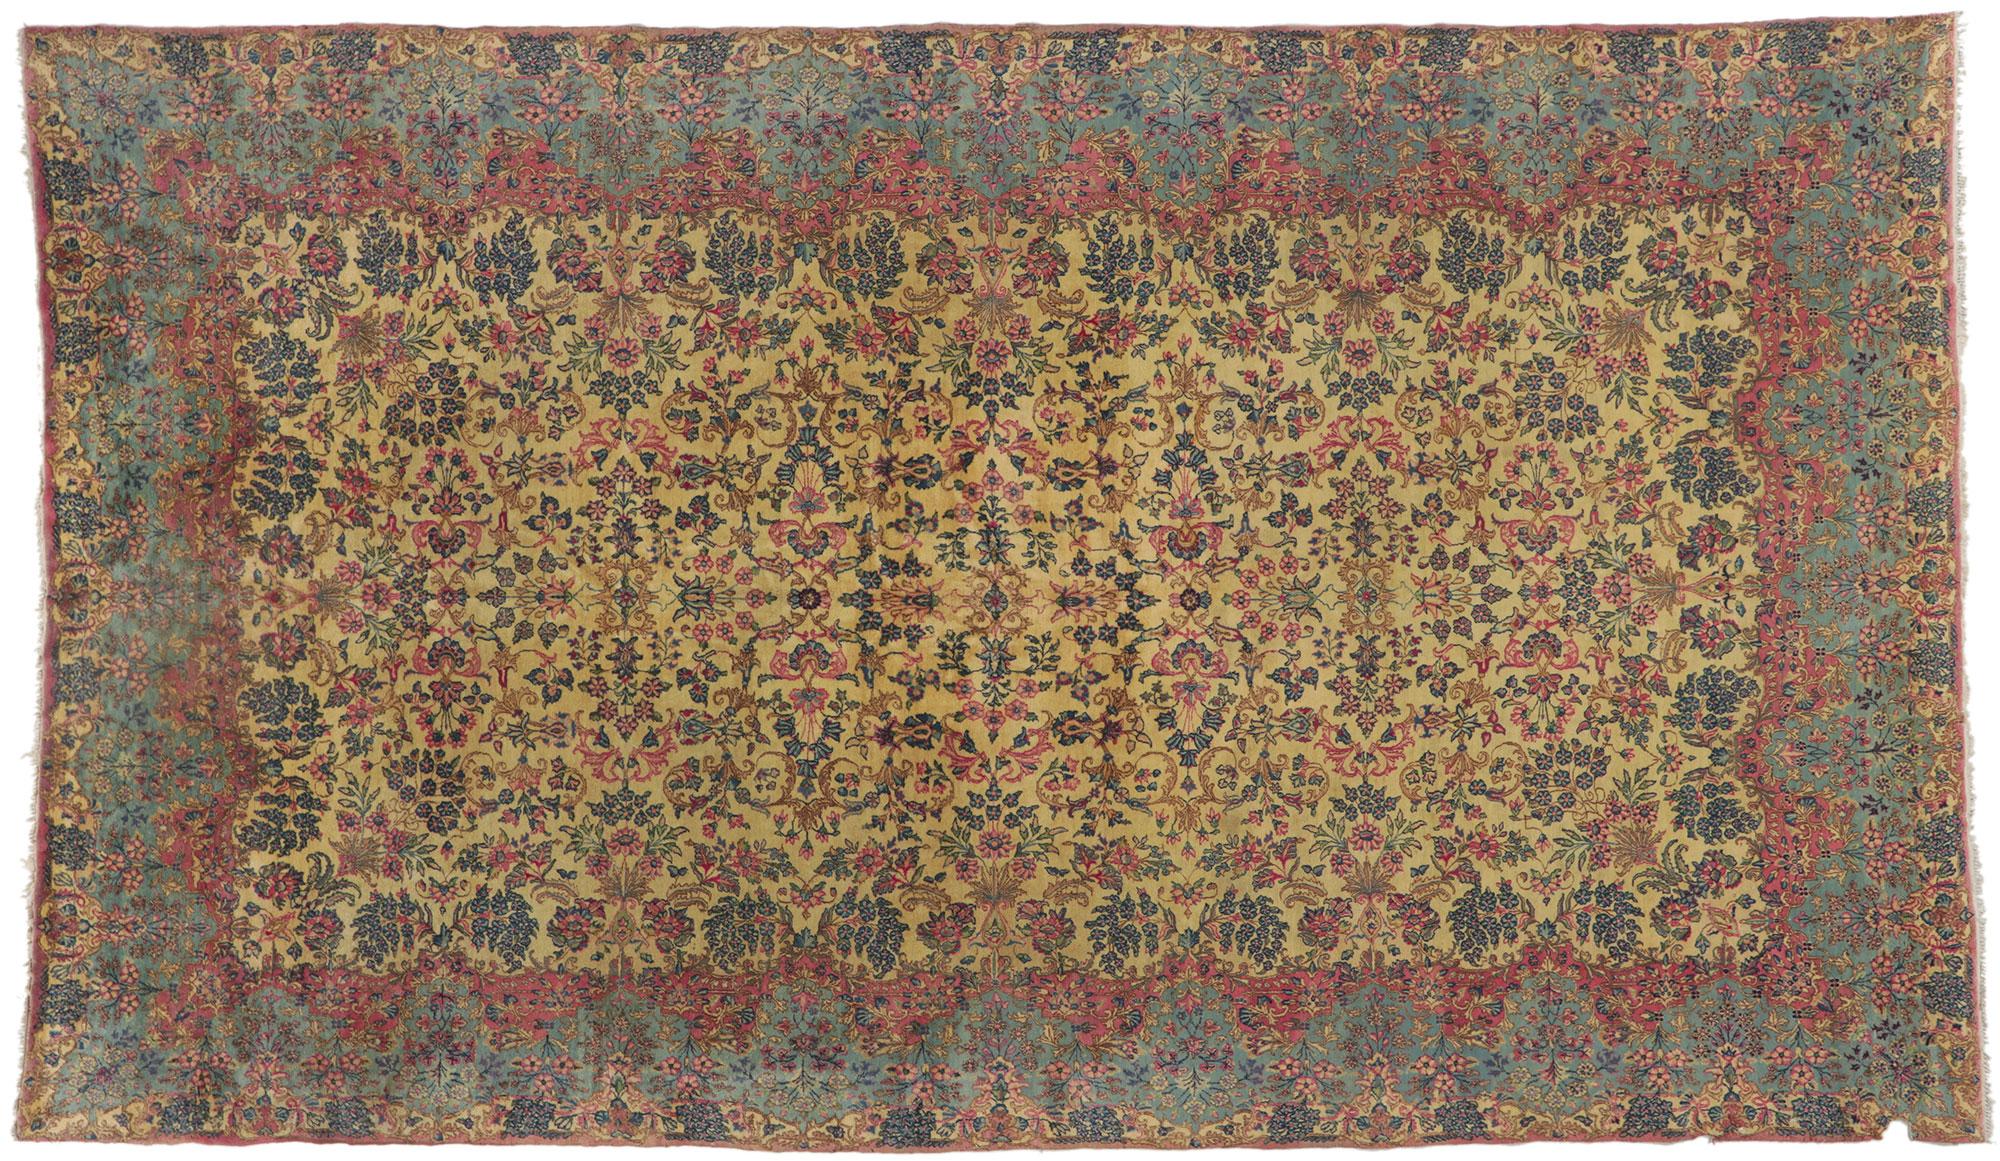 Antique Persian Kerman Rug, 09'07 x 16'03 For Sale 2